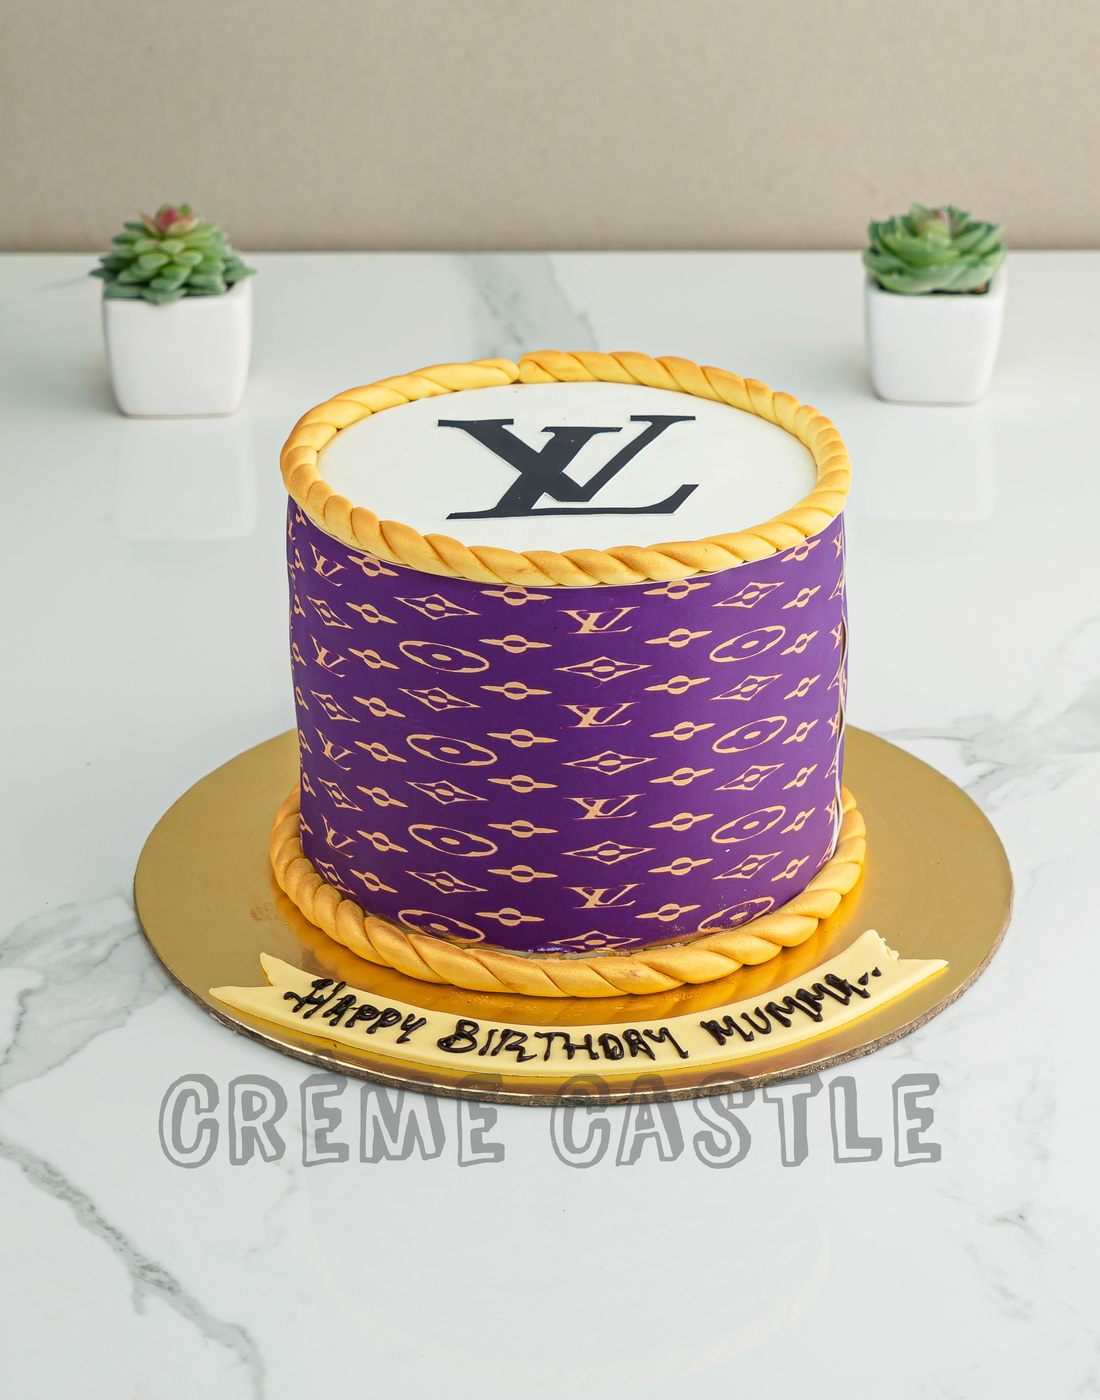 LV Bag Cake!  Happy Cake Studio